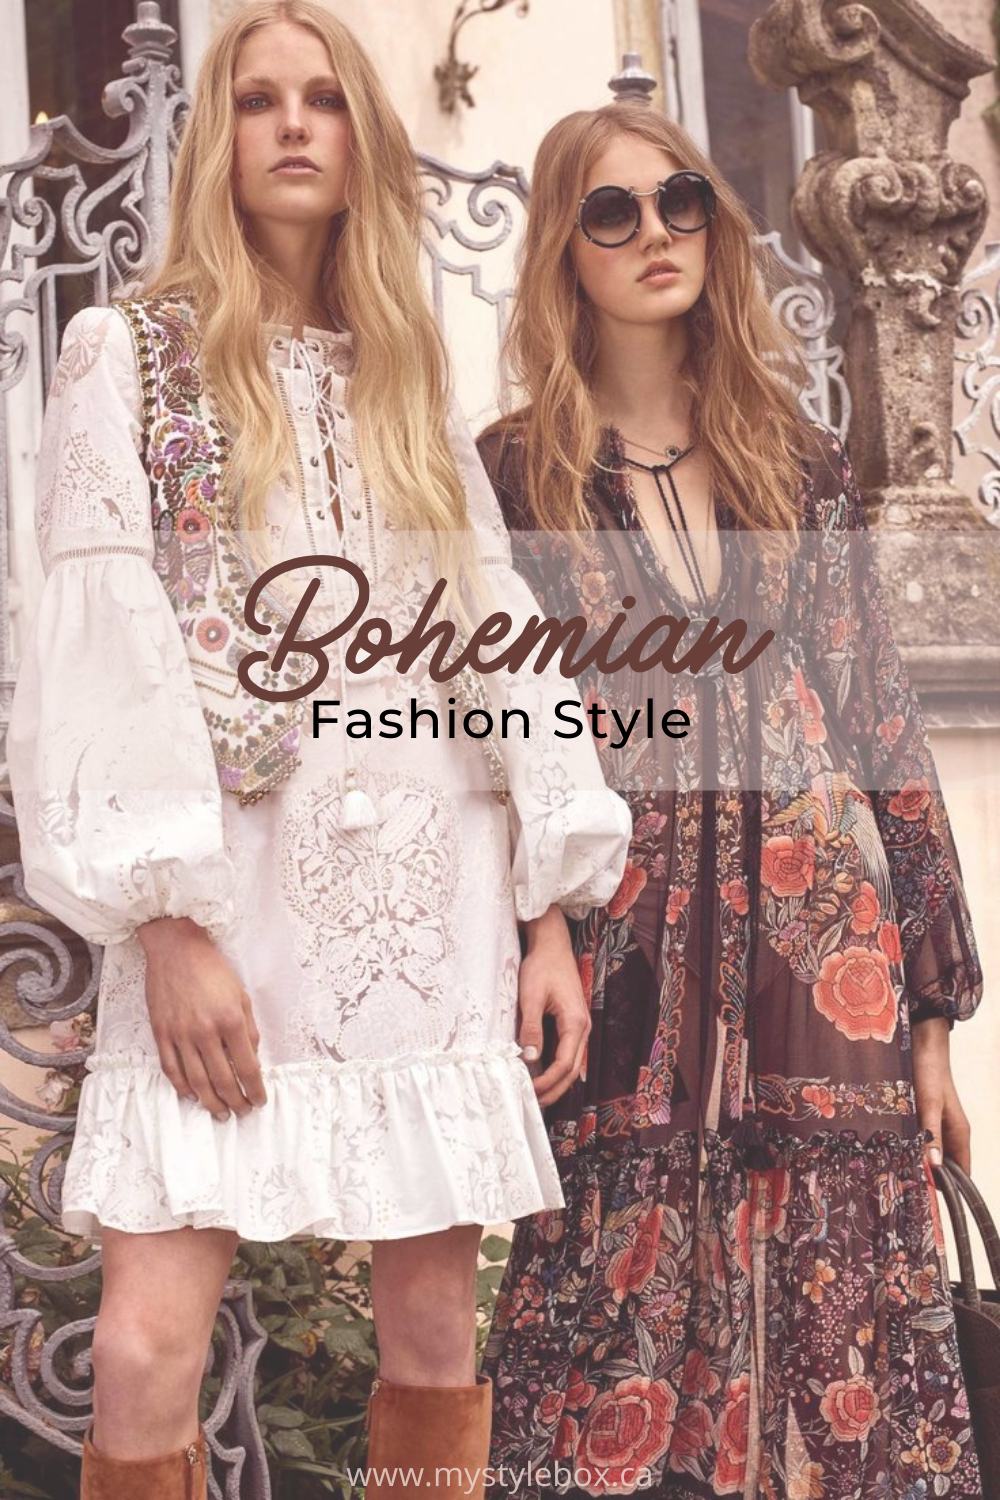 Bohemian Fashion Style: Free-Spirited Elegance & Creativity